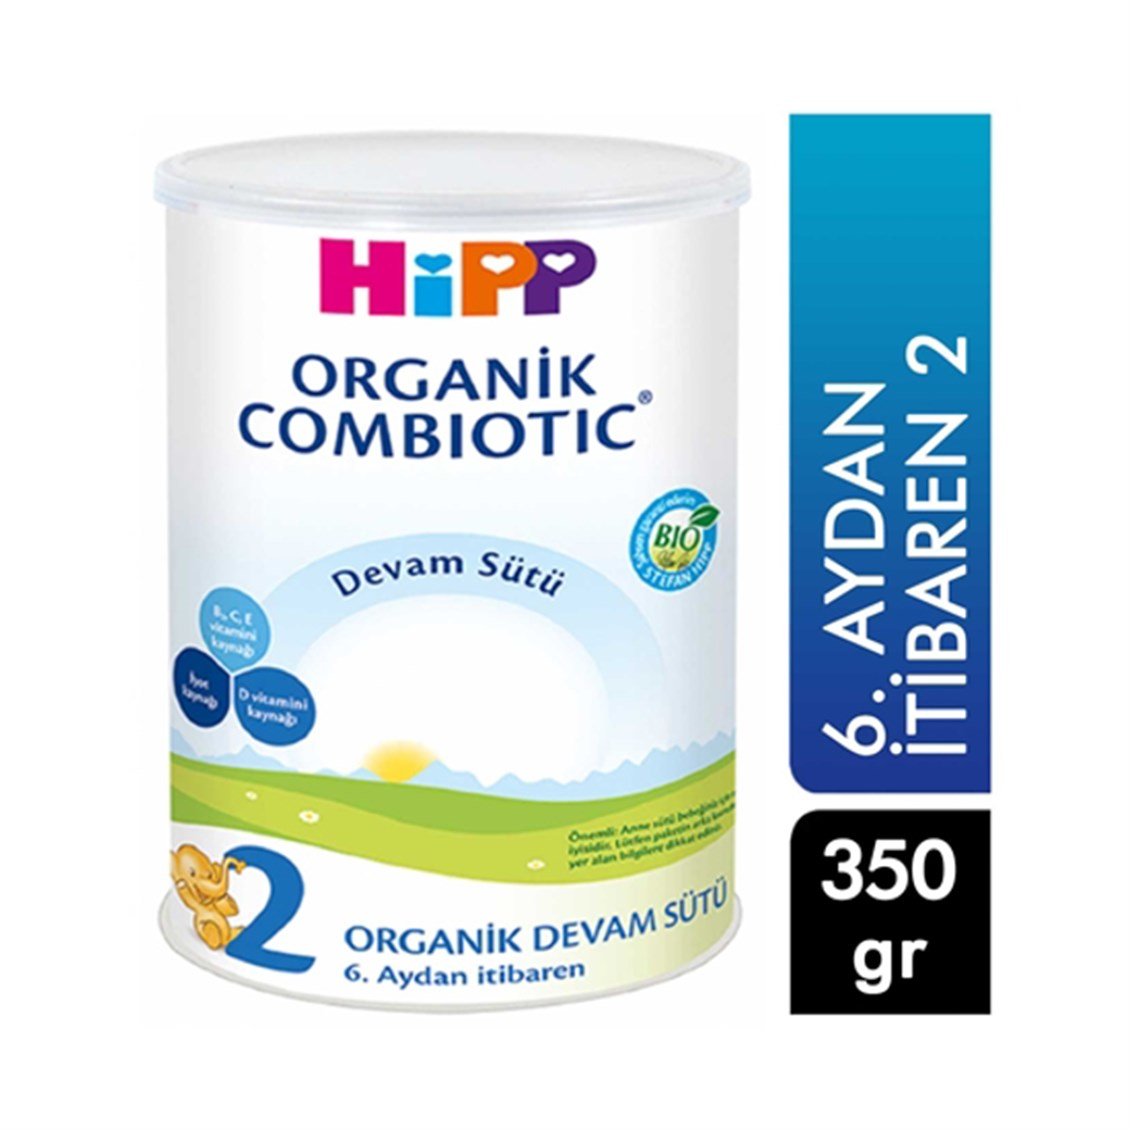 Hipp 2 Organik Combiotic Devam Sütü 350 gr - Onur Market